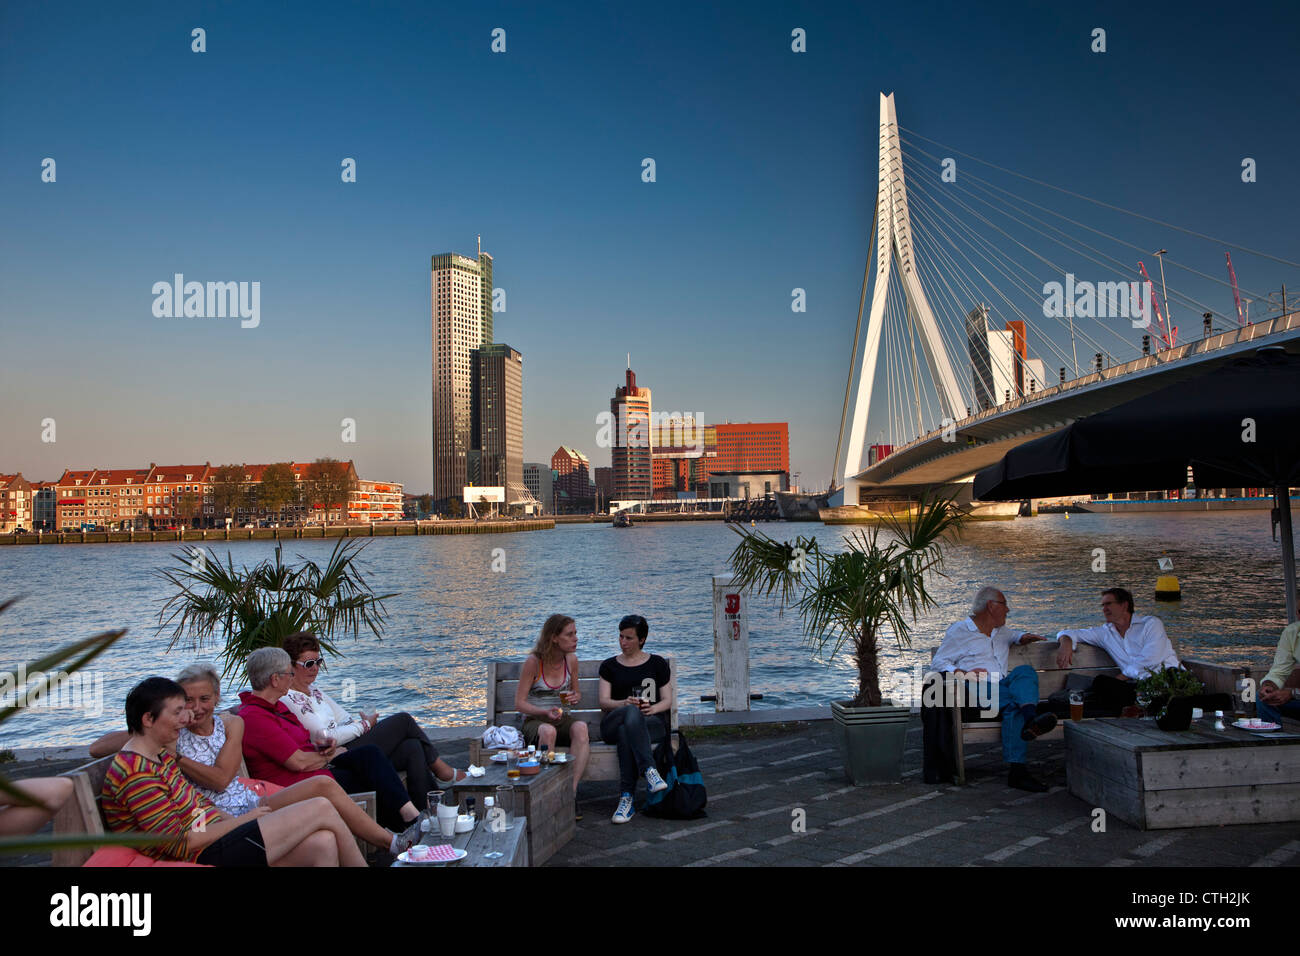 I Paesi Bassi, Rotterdam. Persone in relax outdoor cafe, vicino ponte denominato Erasmusbrug, architetto Ben van Berkel. Foto Stock